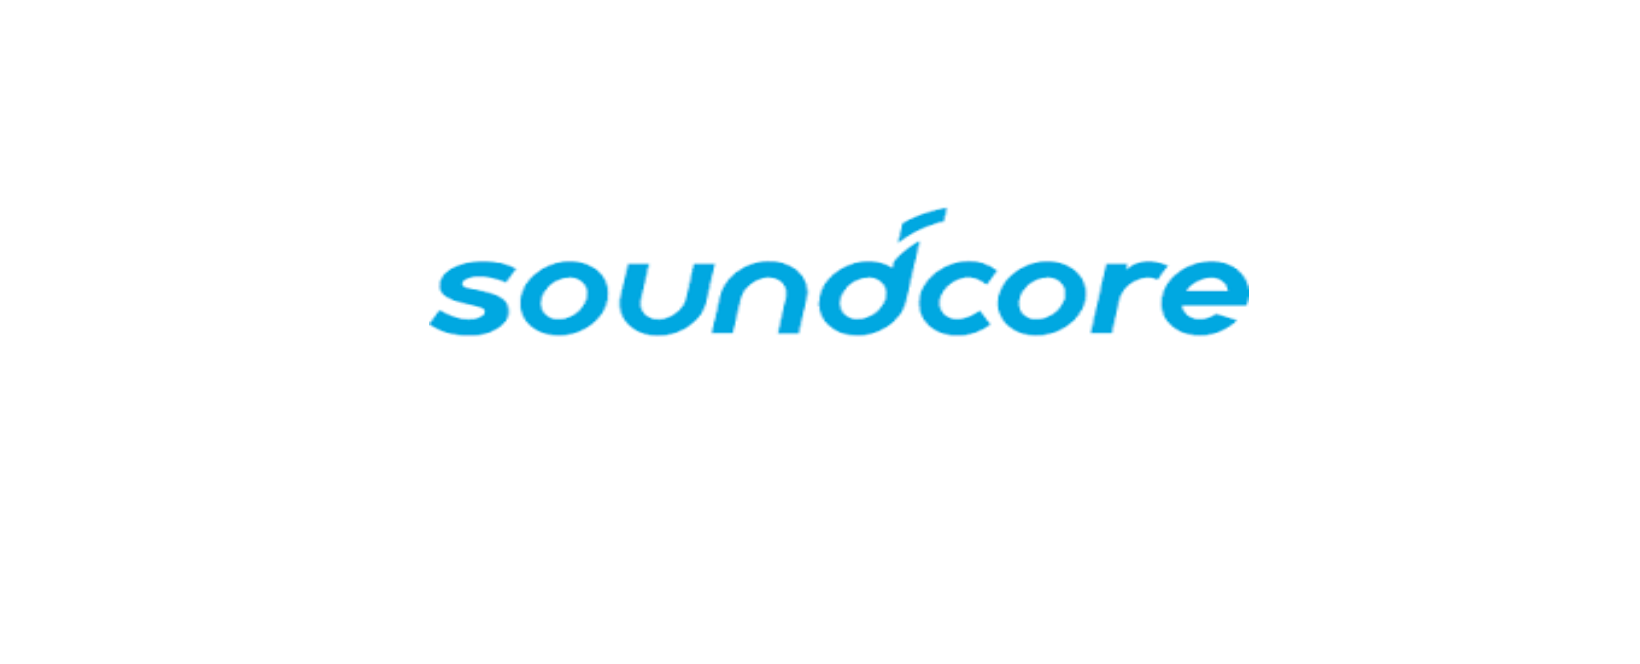 Soundcore Discount Code 2022